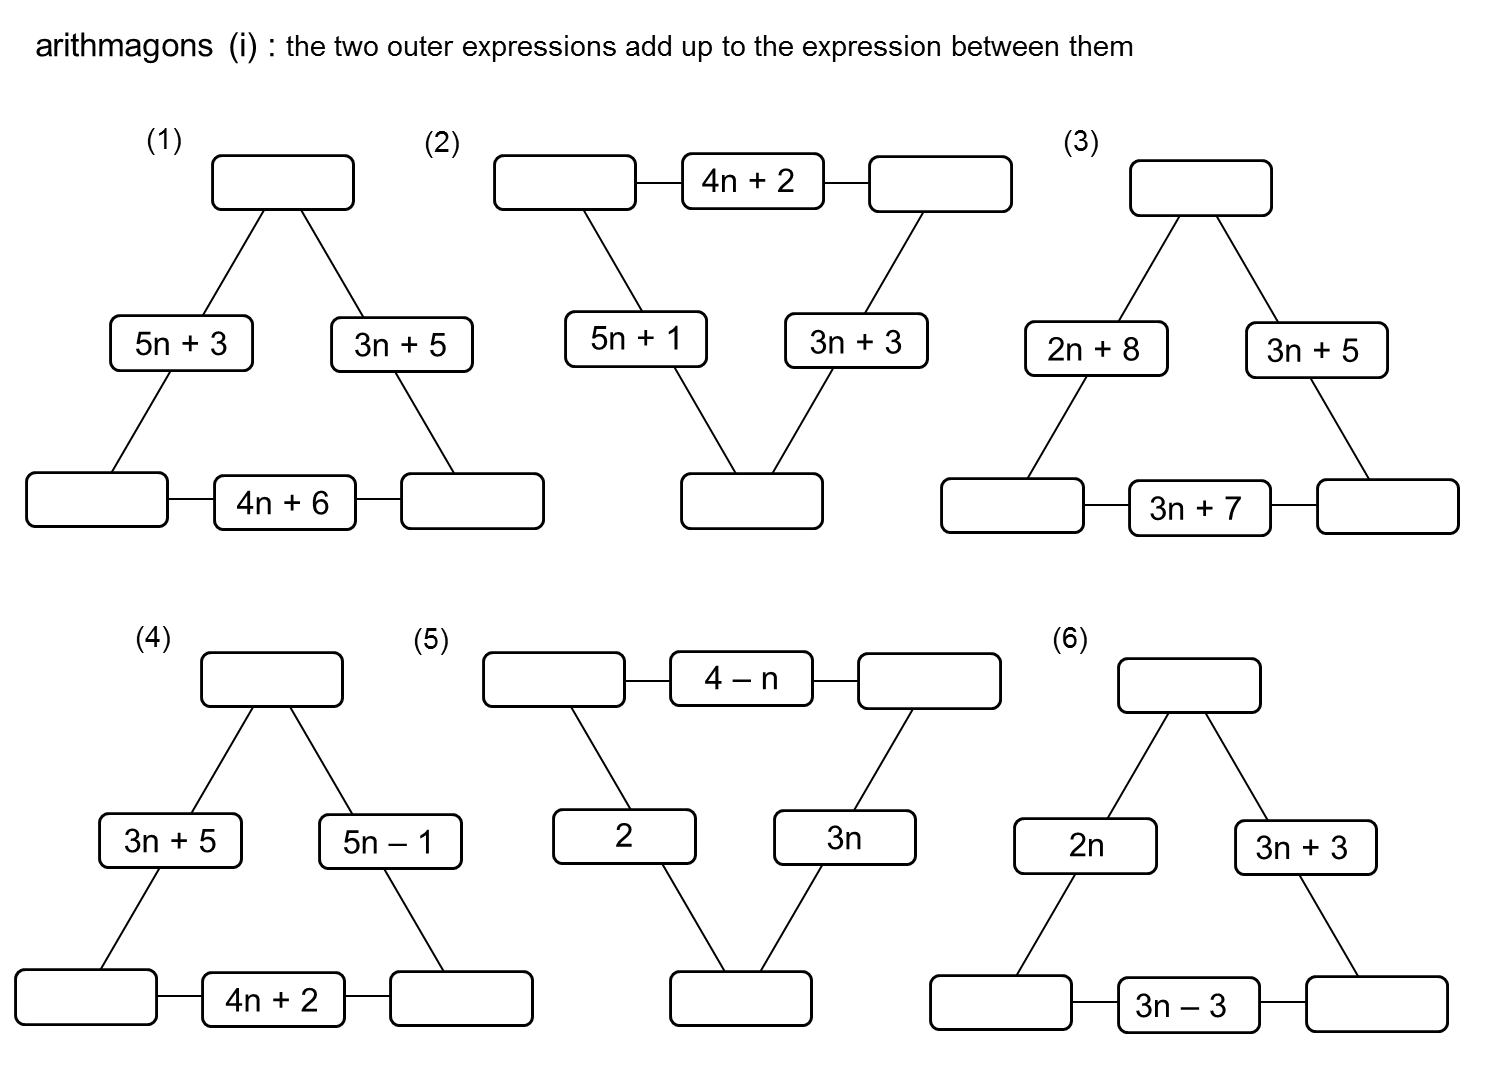 median-don-steward-mathematics-teaching-expressions-arithmagons